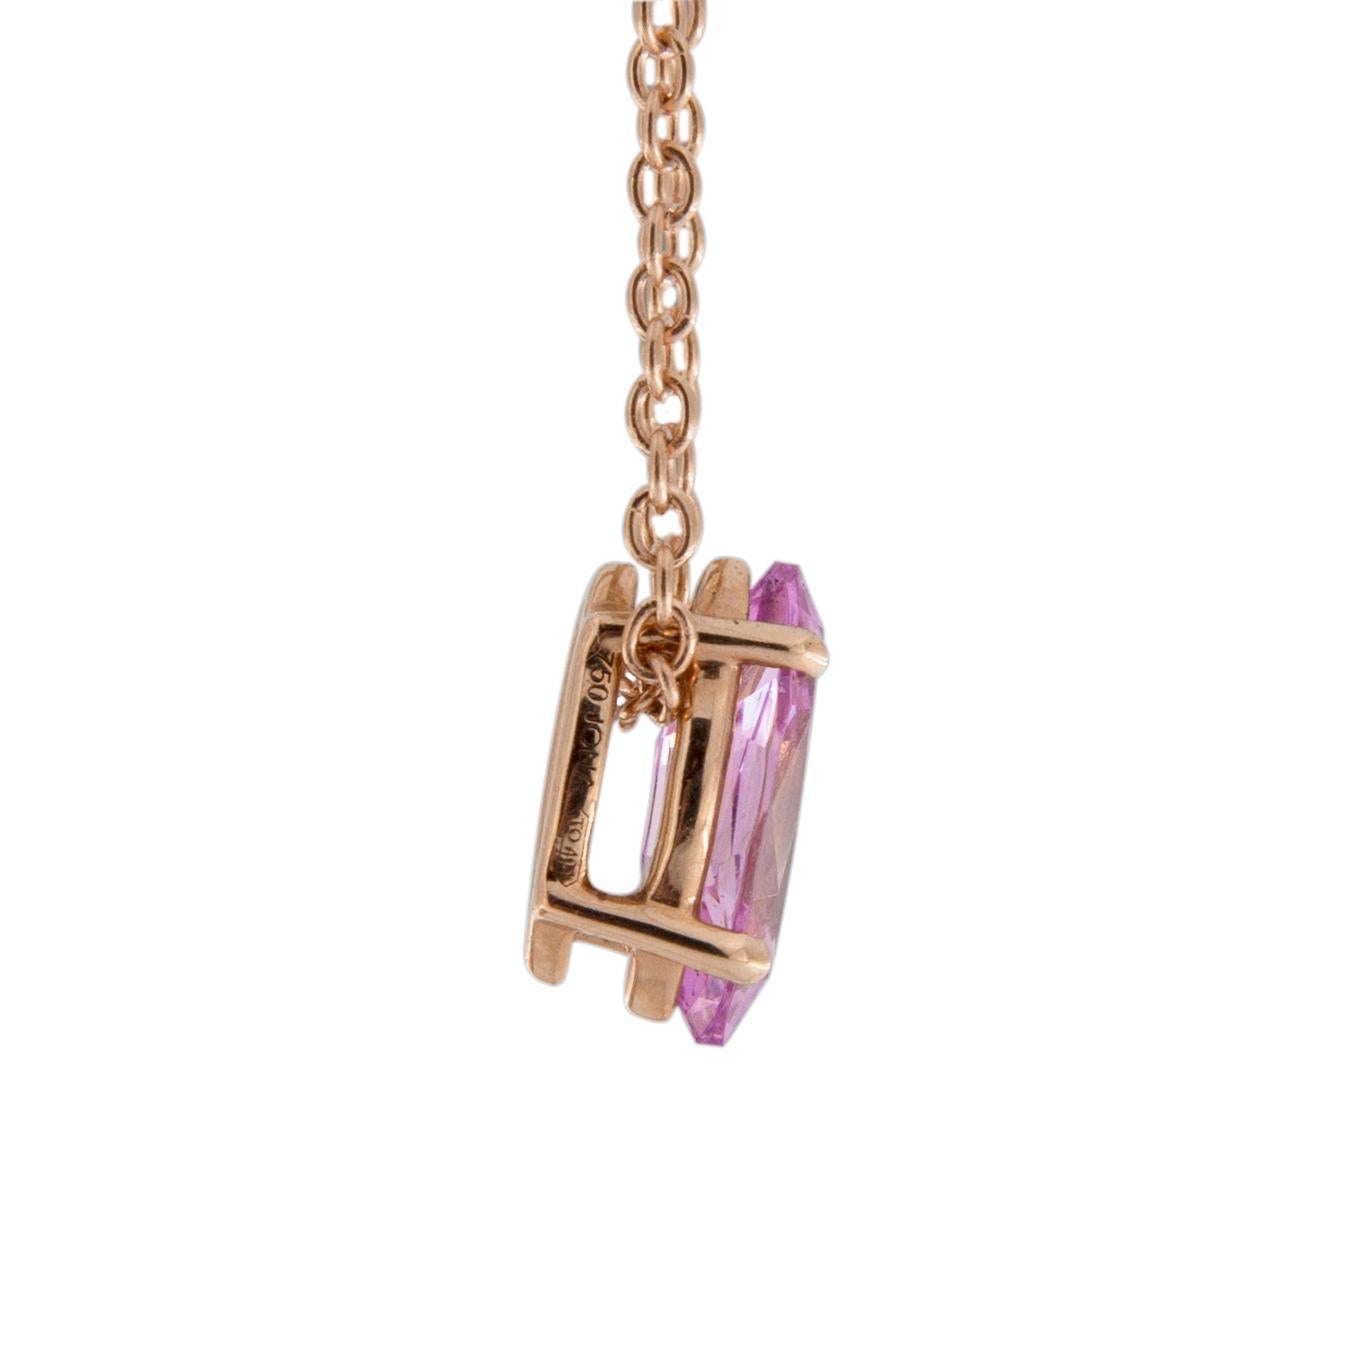 Oval Cut Jona Pink Spinel 18 Karat Rose Gold Pendant Chain Necklace